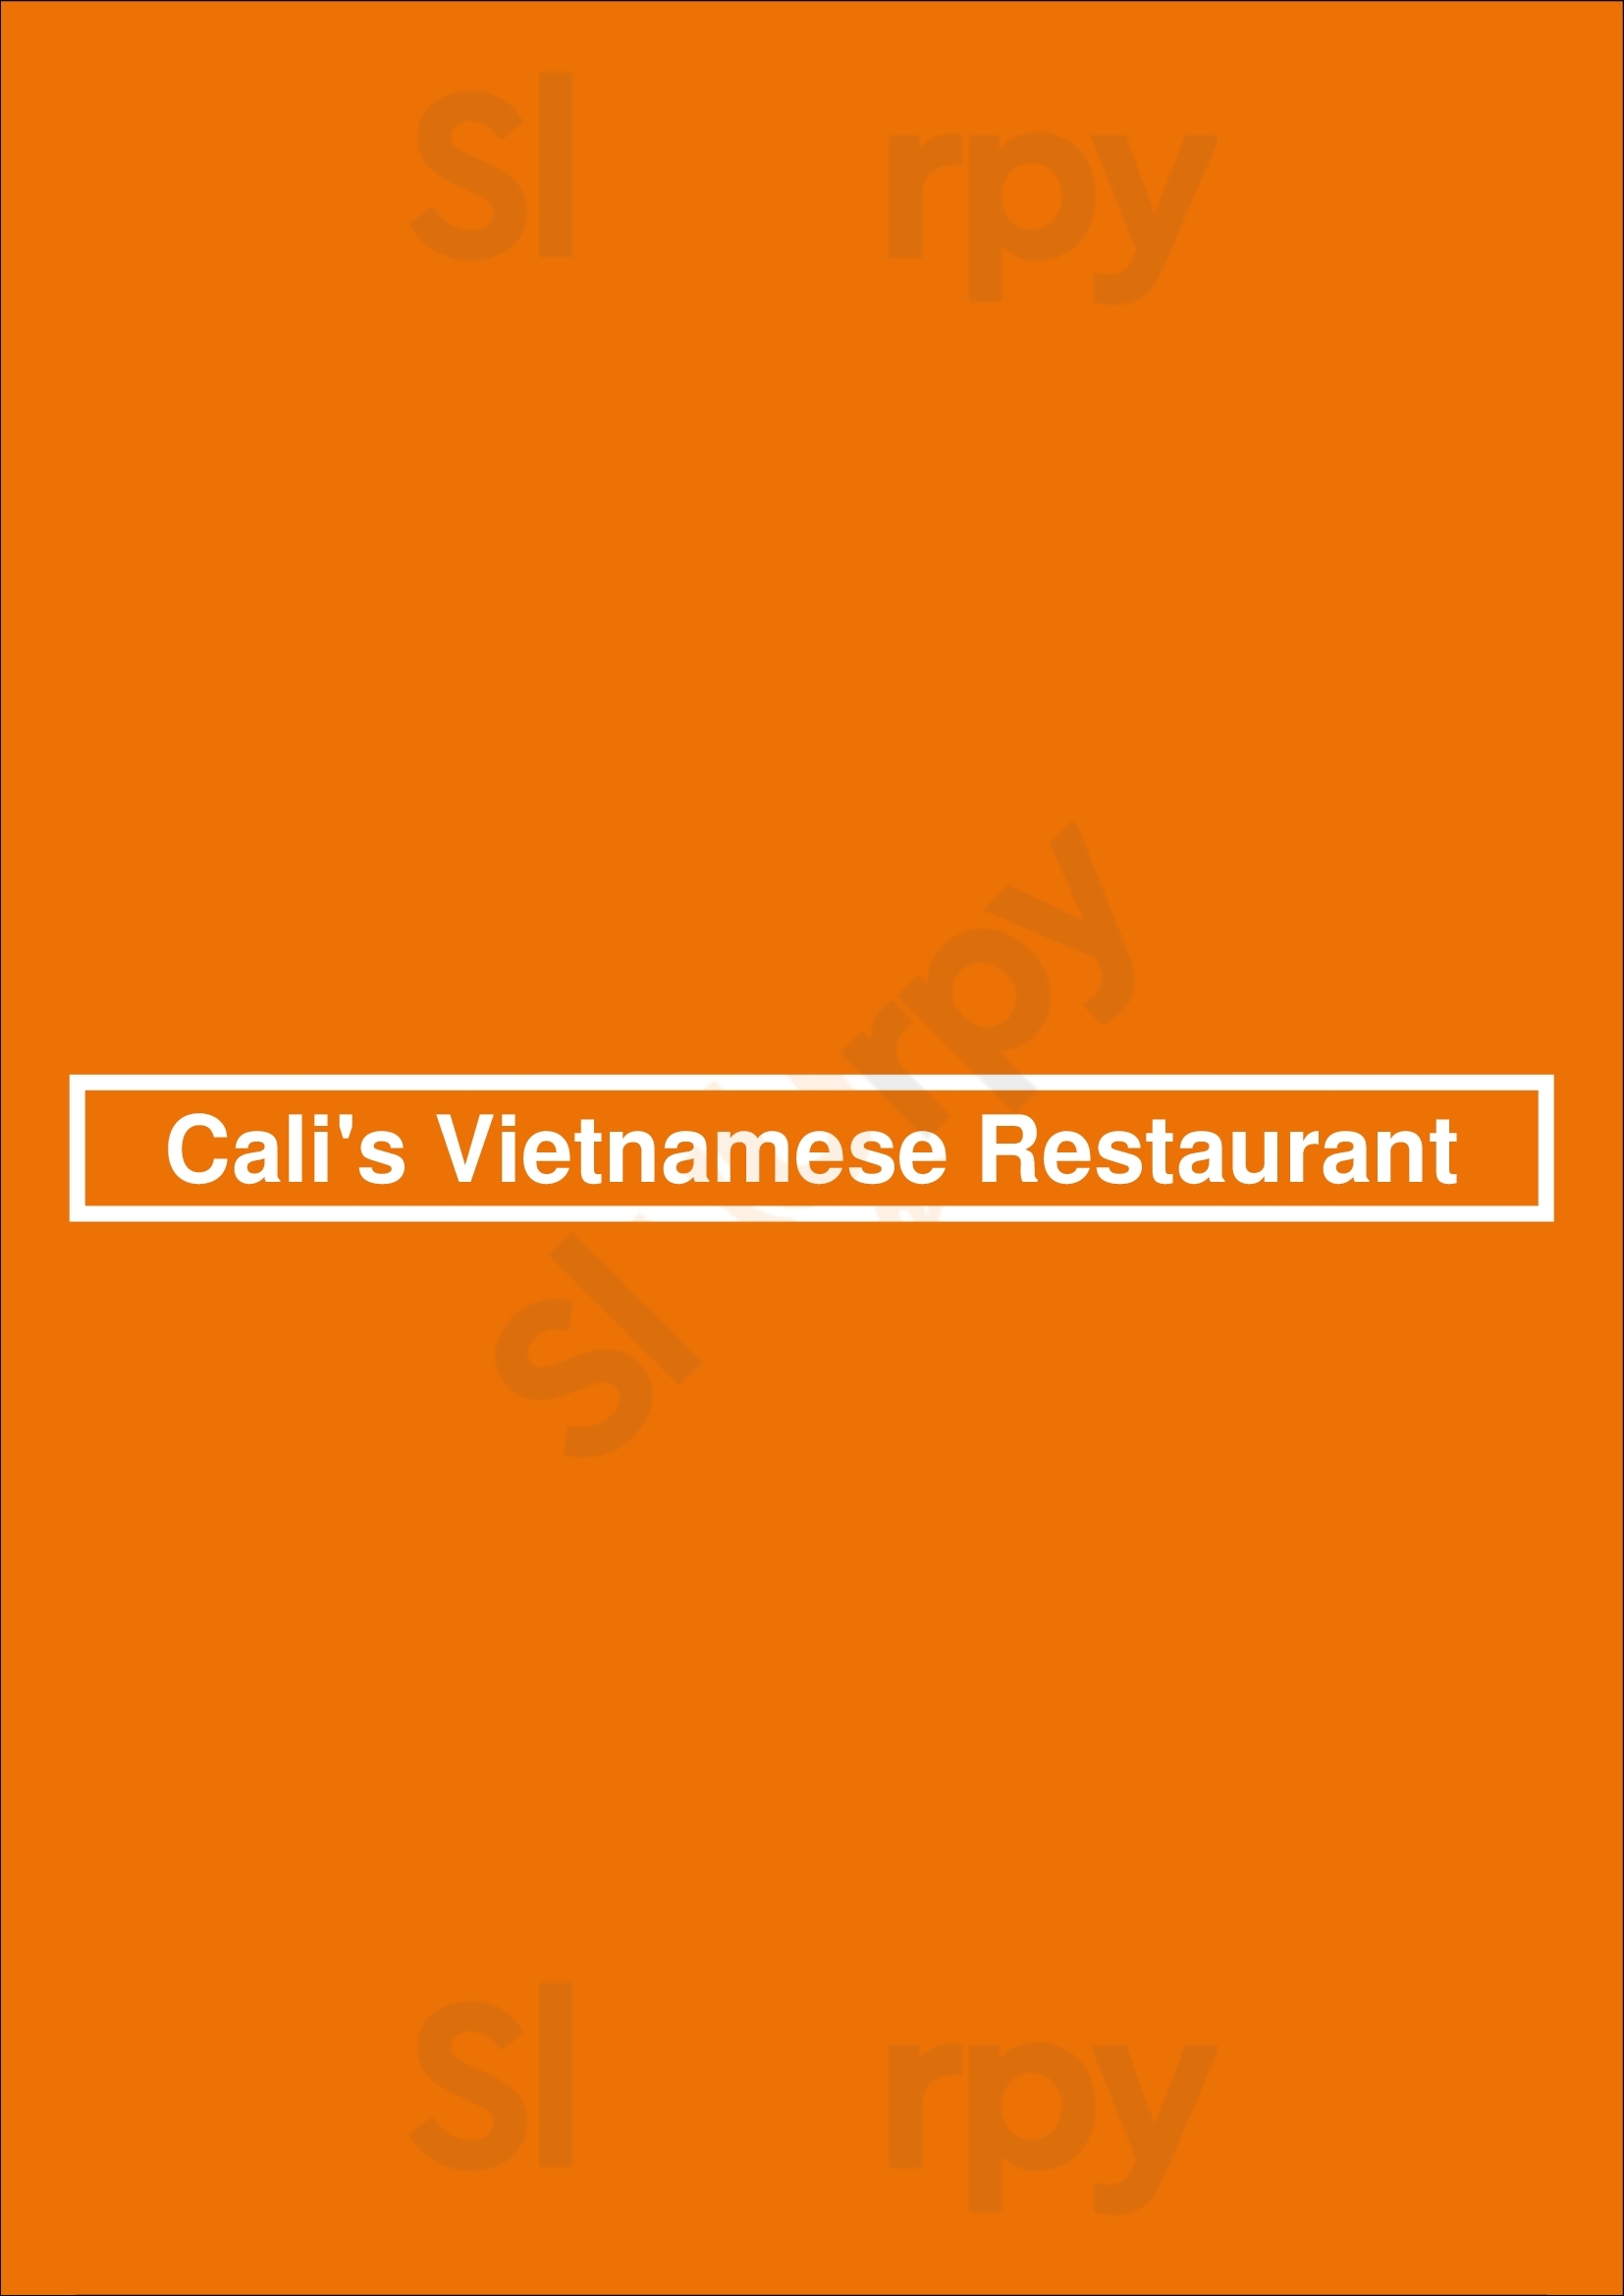 Cali's Vietnamese Restaurant Minneapolis Menu - 1